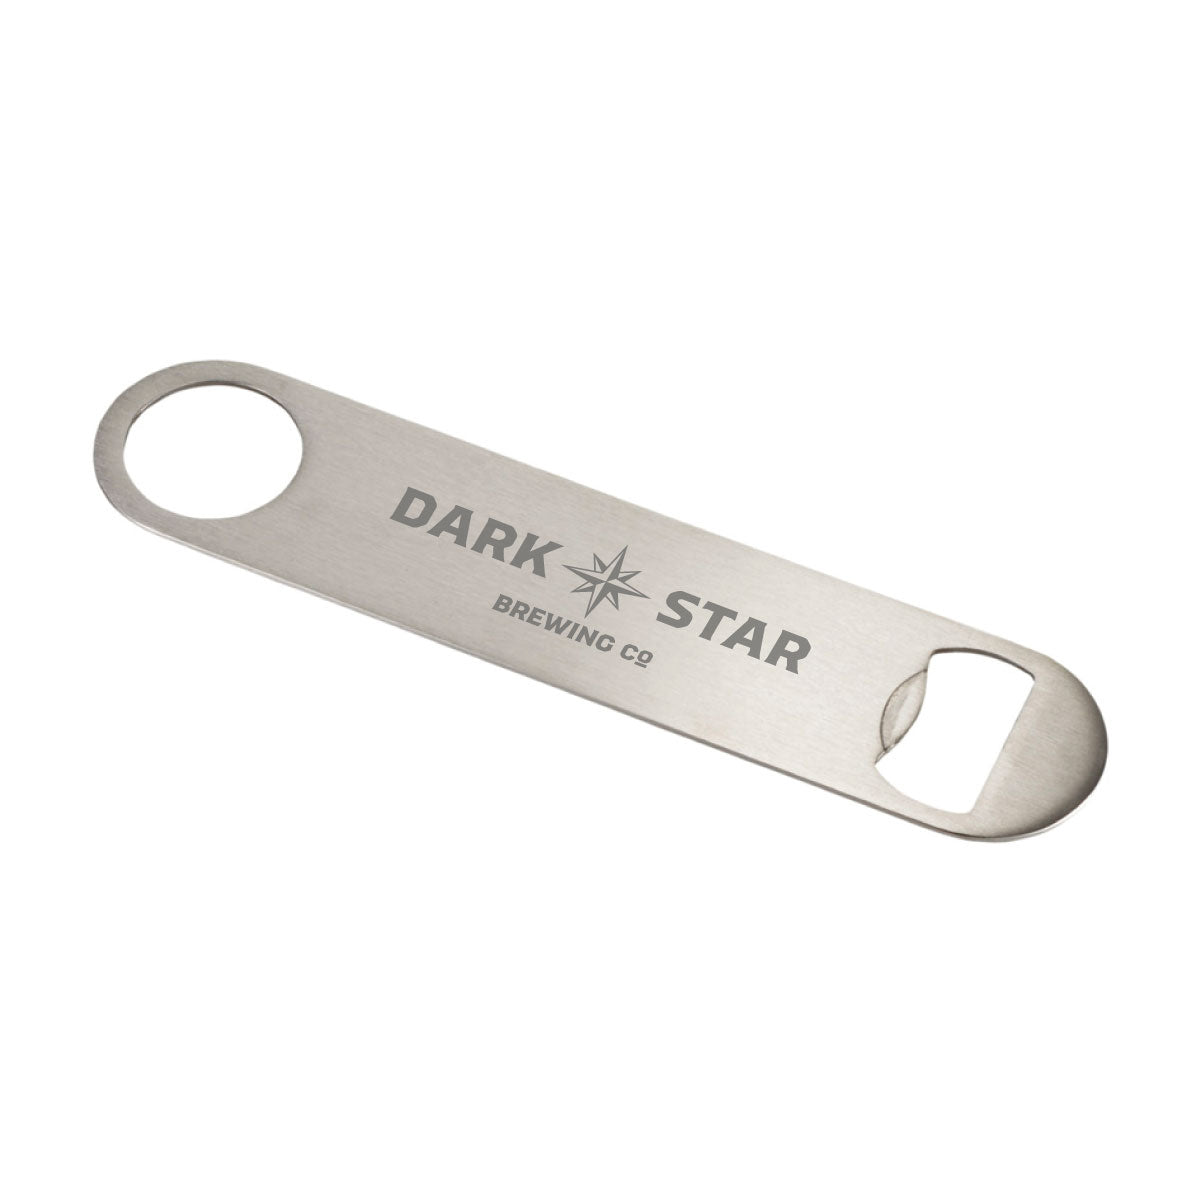 Dark Star Bar Blade - Dark Star Brewing Co.